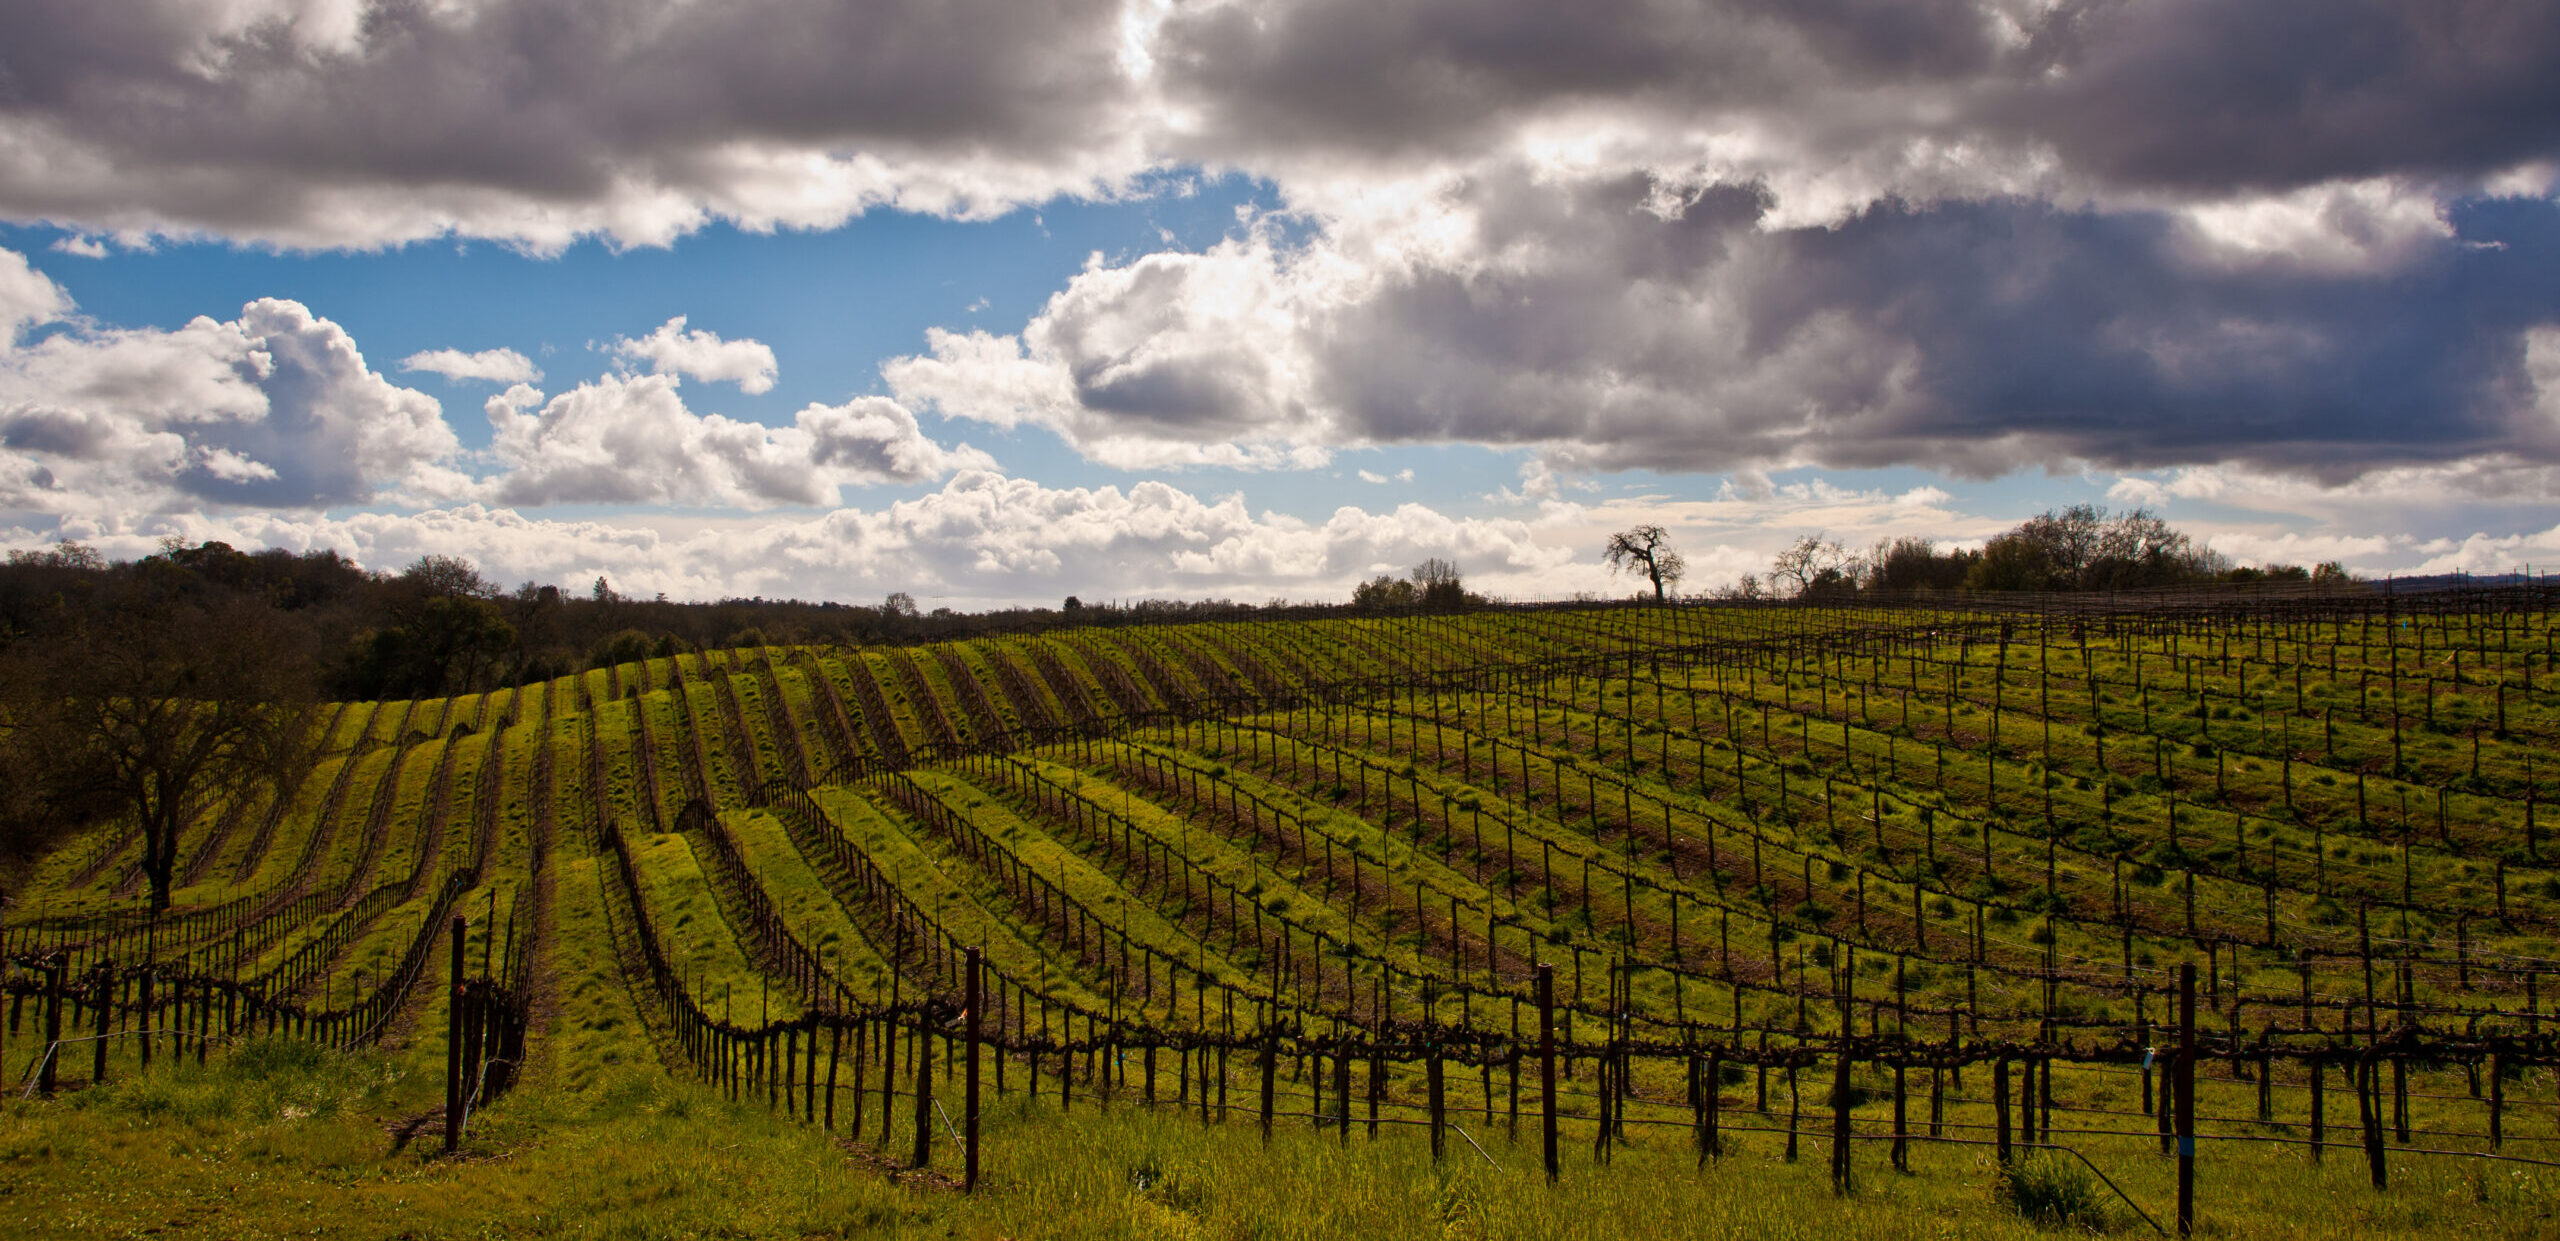 sonoma county vineyard